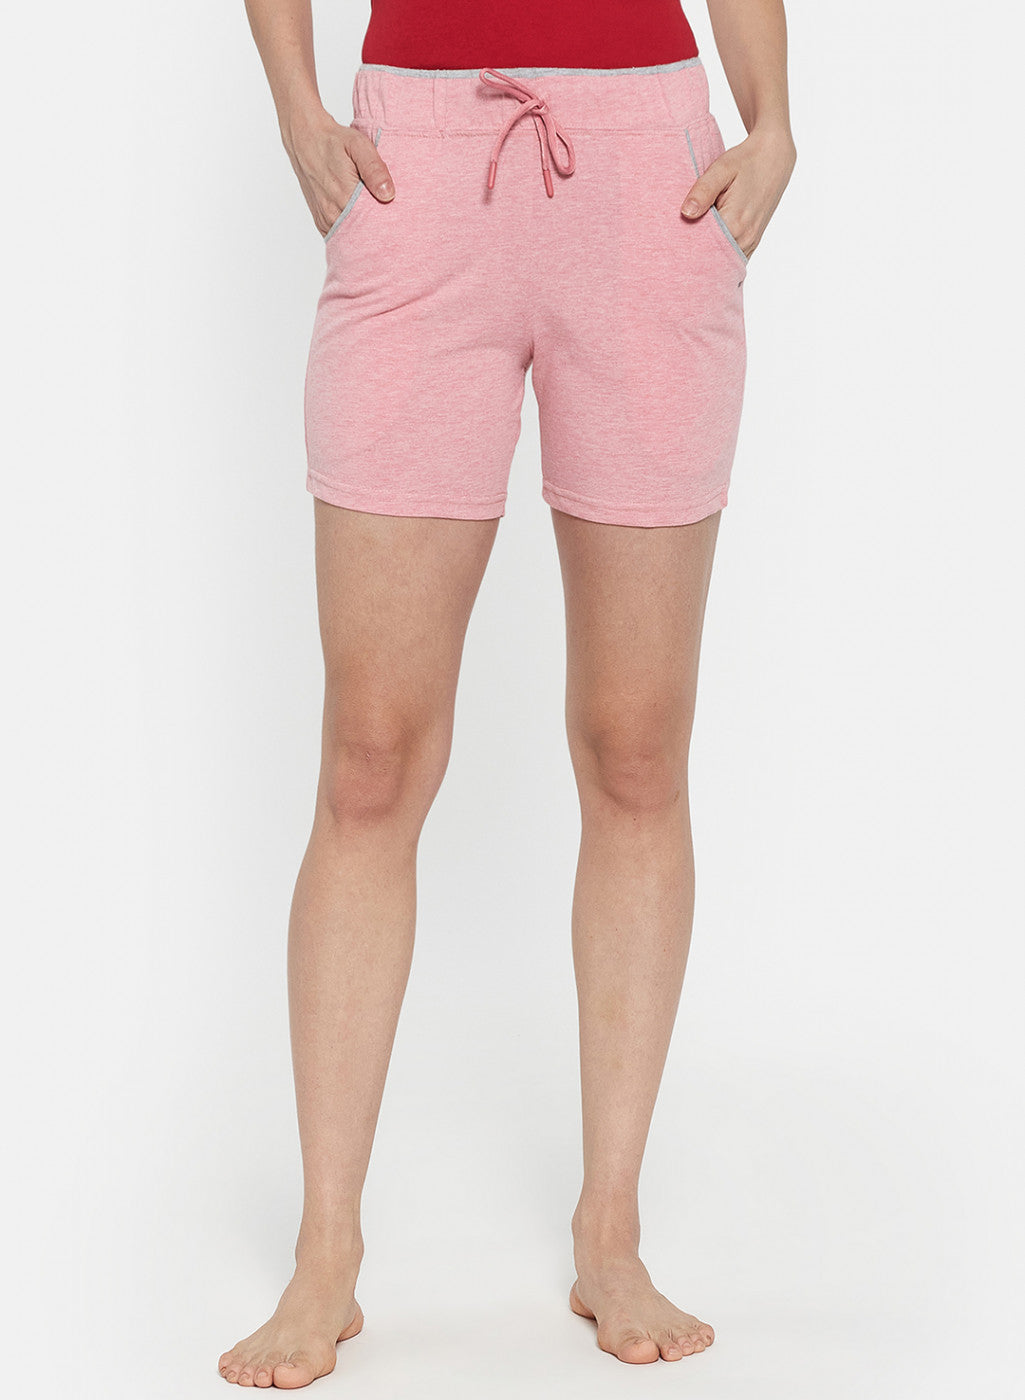 Womens Pink Plain Shorts